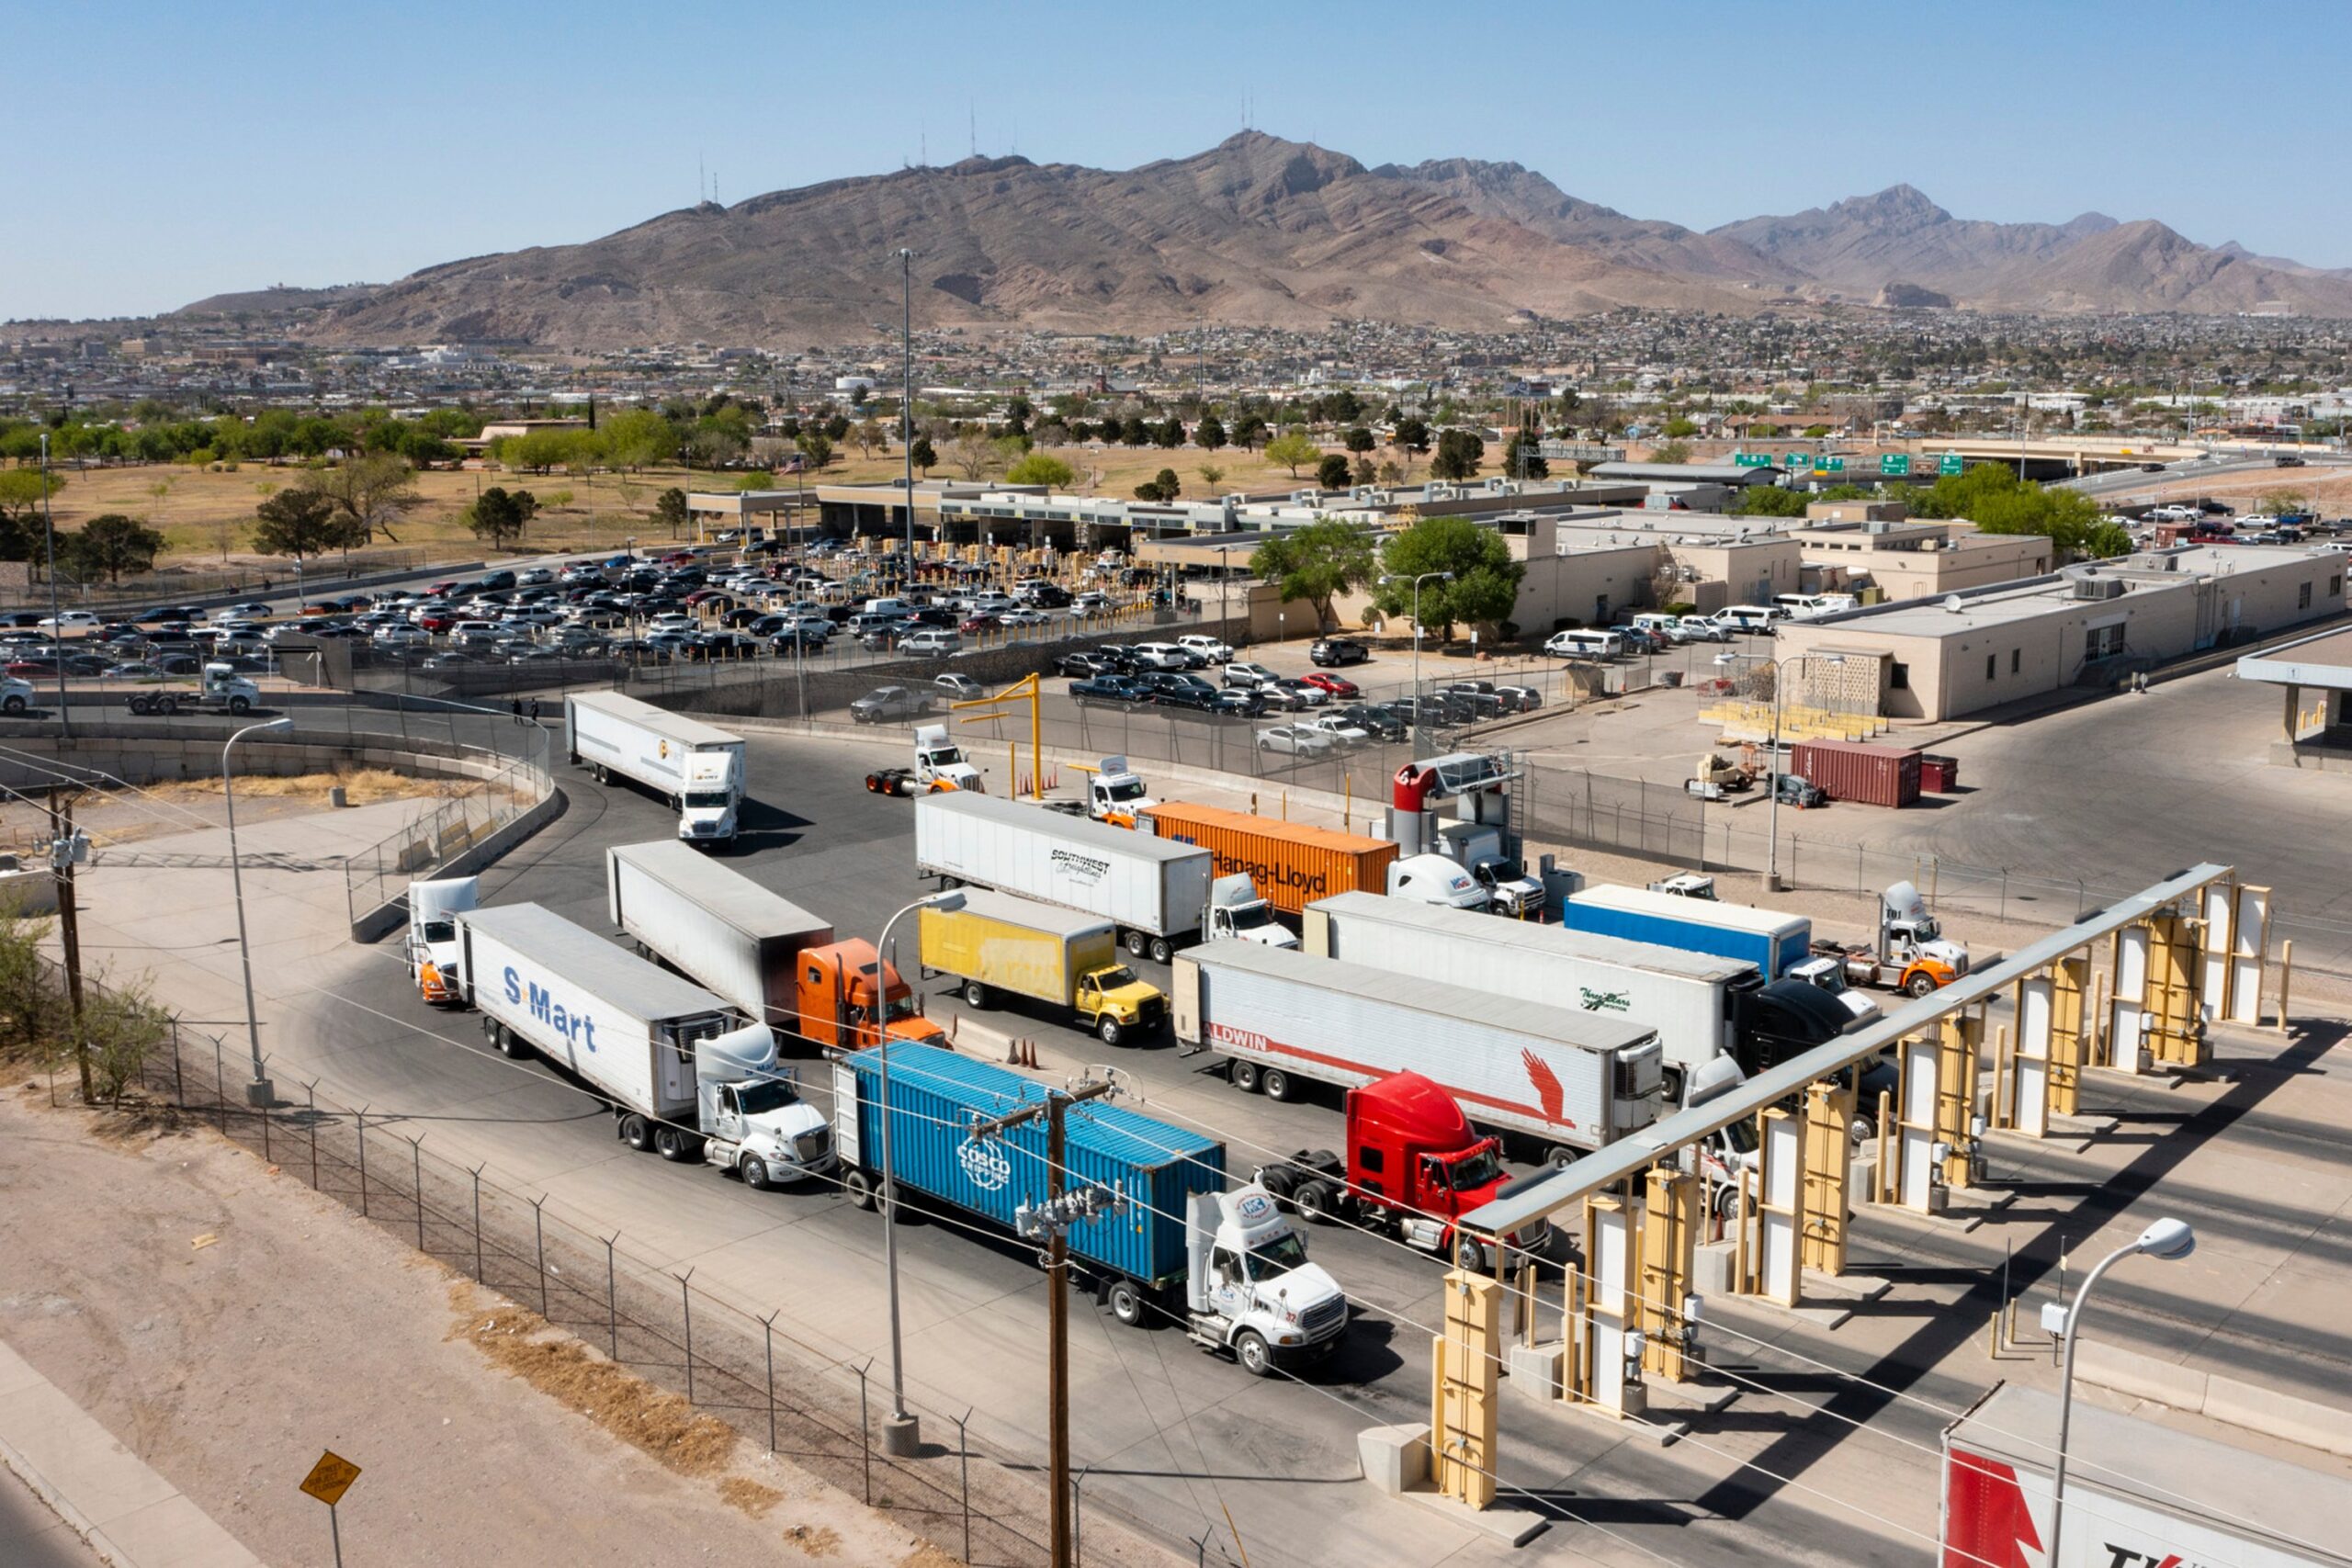 Commercial truck traffic in El Paso